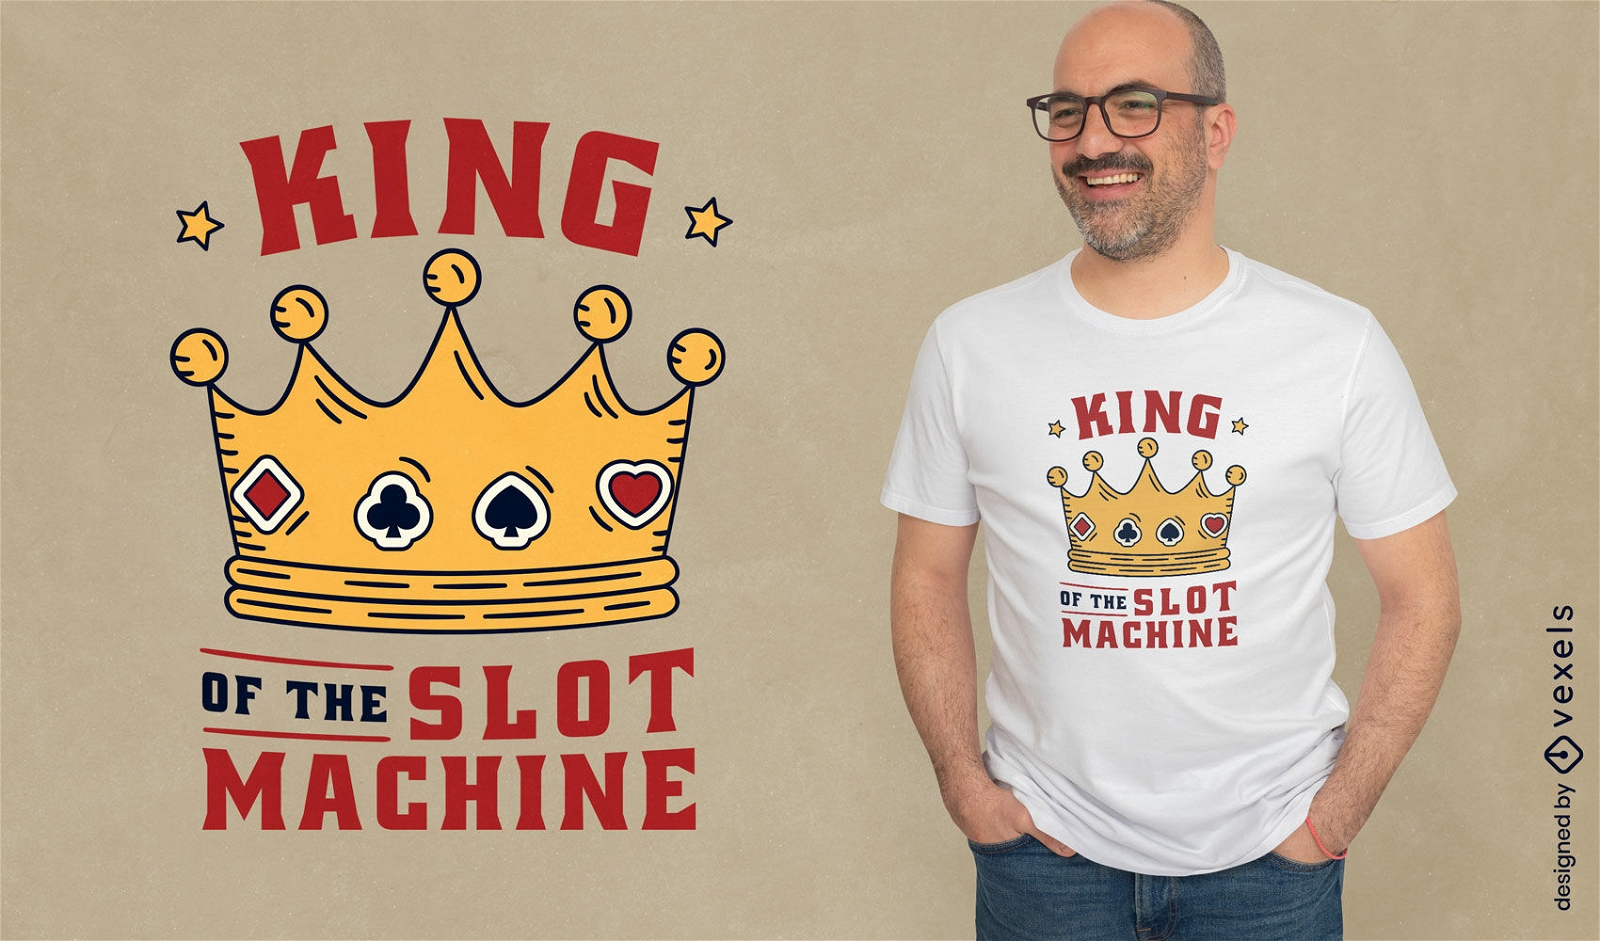 King of the slot machine t-shirt design